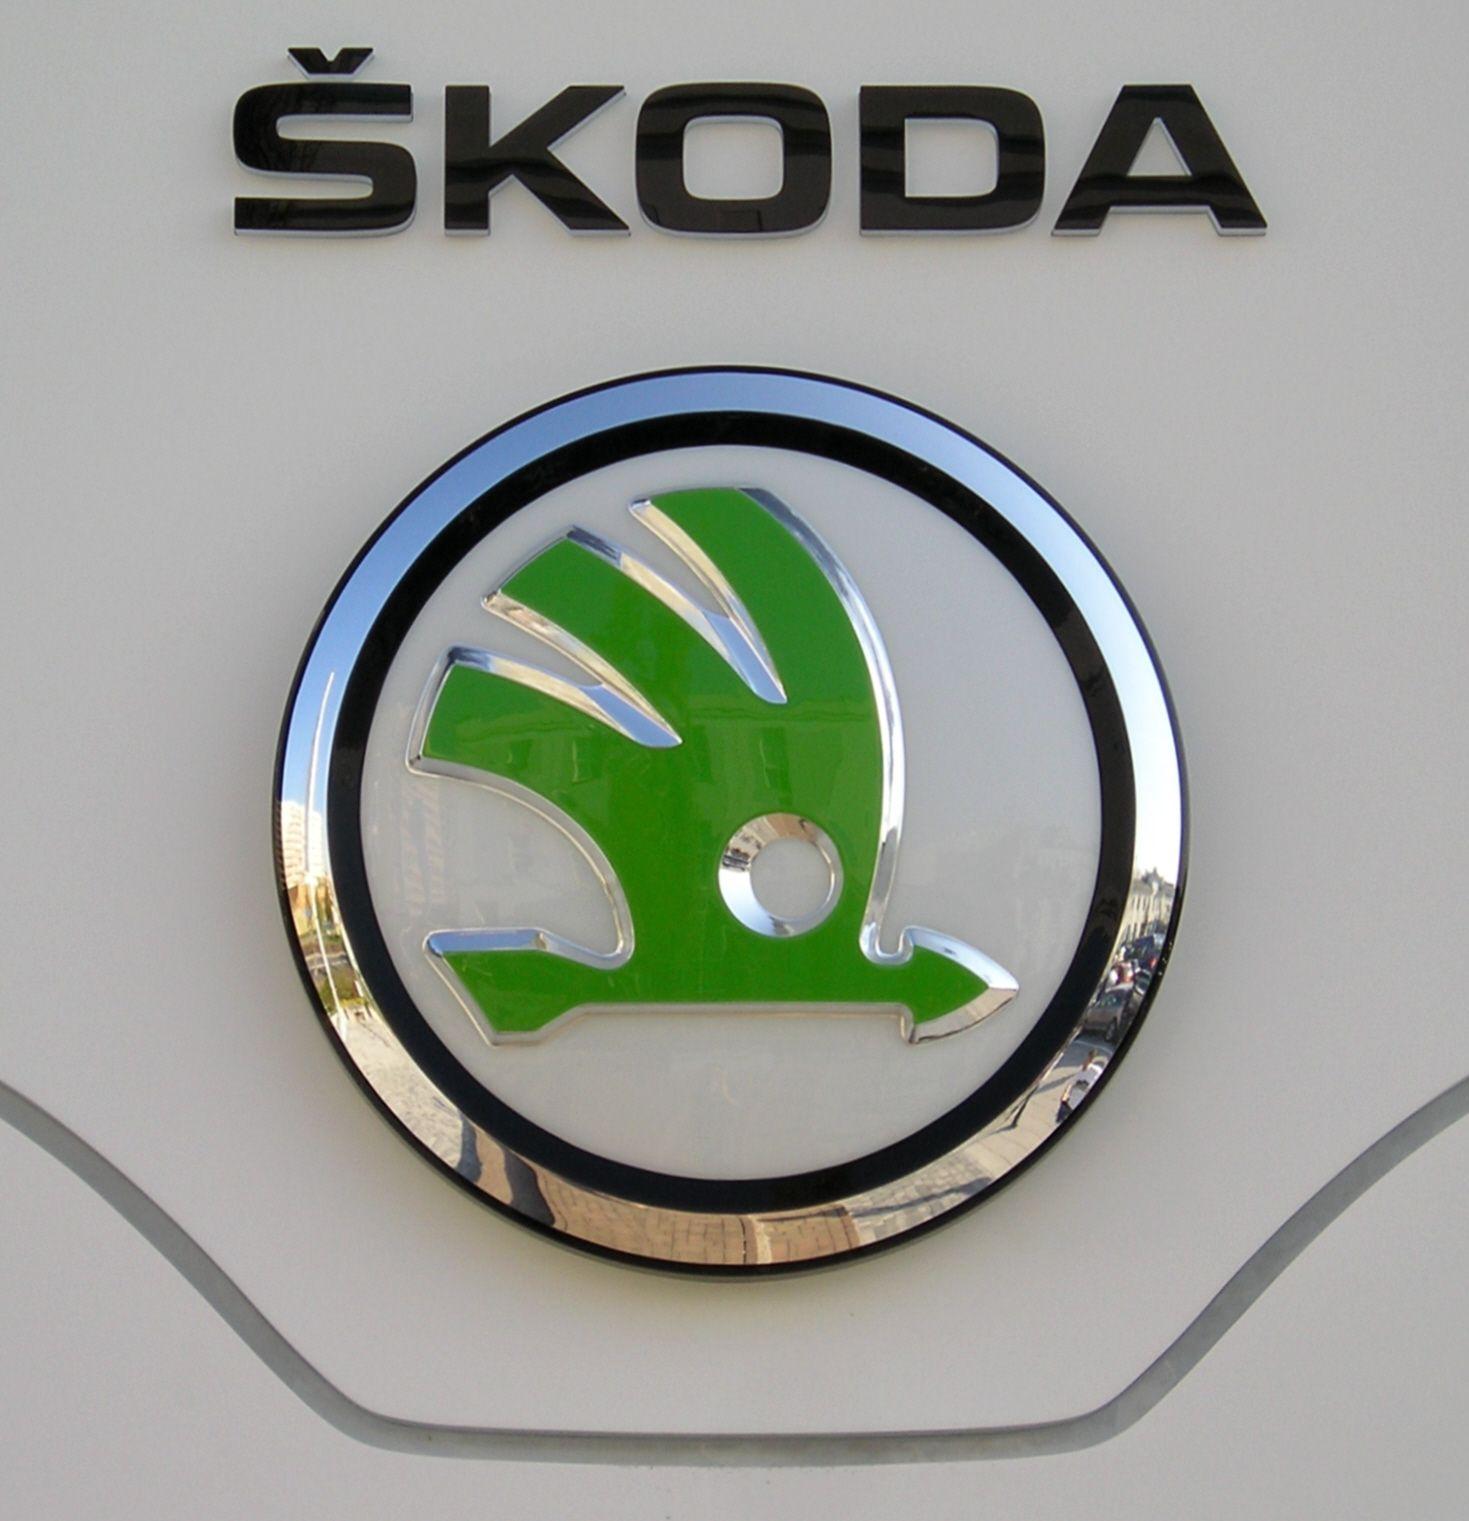 Skoda New Logo - Škoda Logo, Škoda Car Symbol Meaning and History | Car Brand Names.com